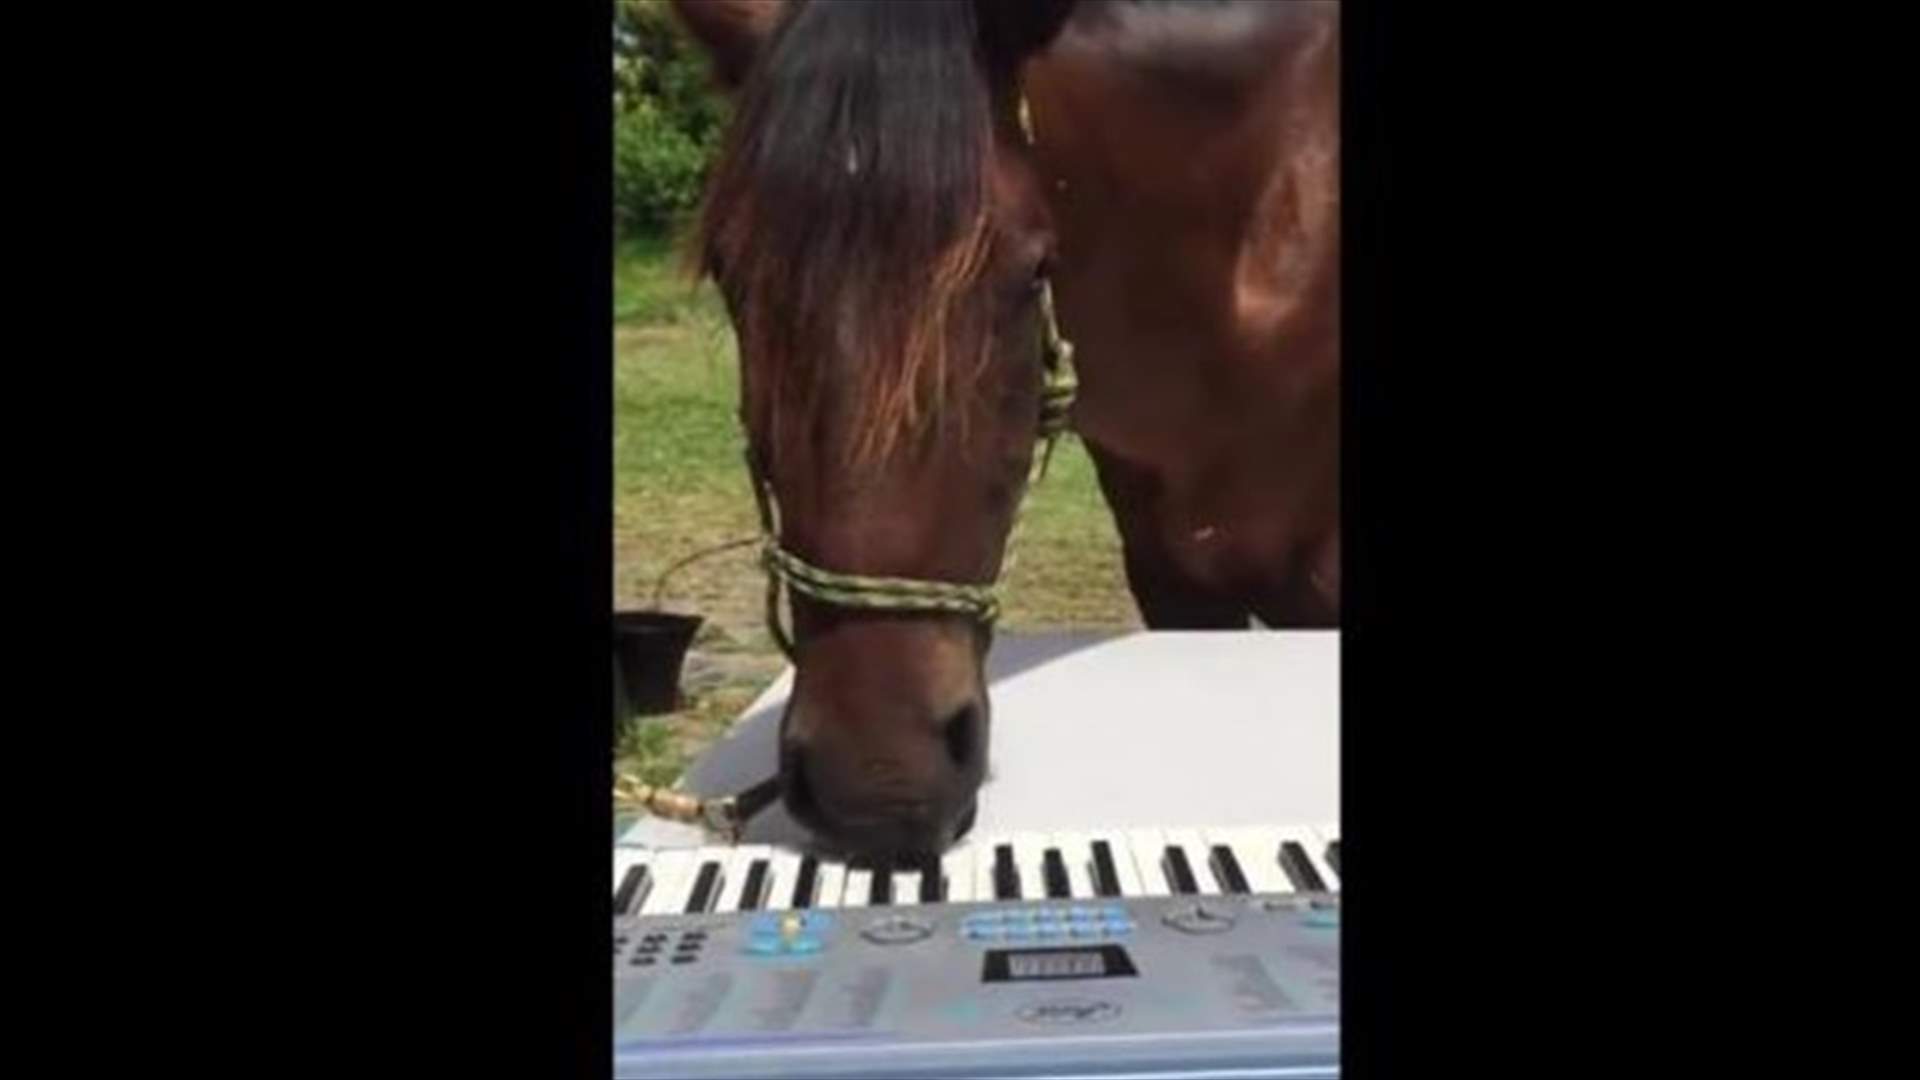 [VIDEO] Horse Plays Piano At Australian Farm